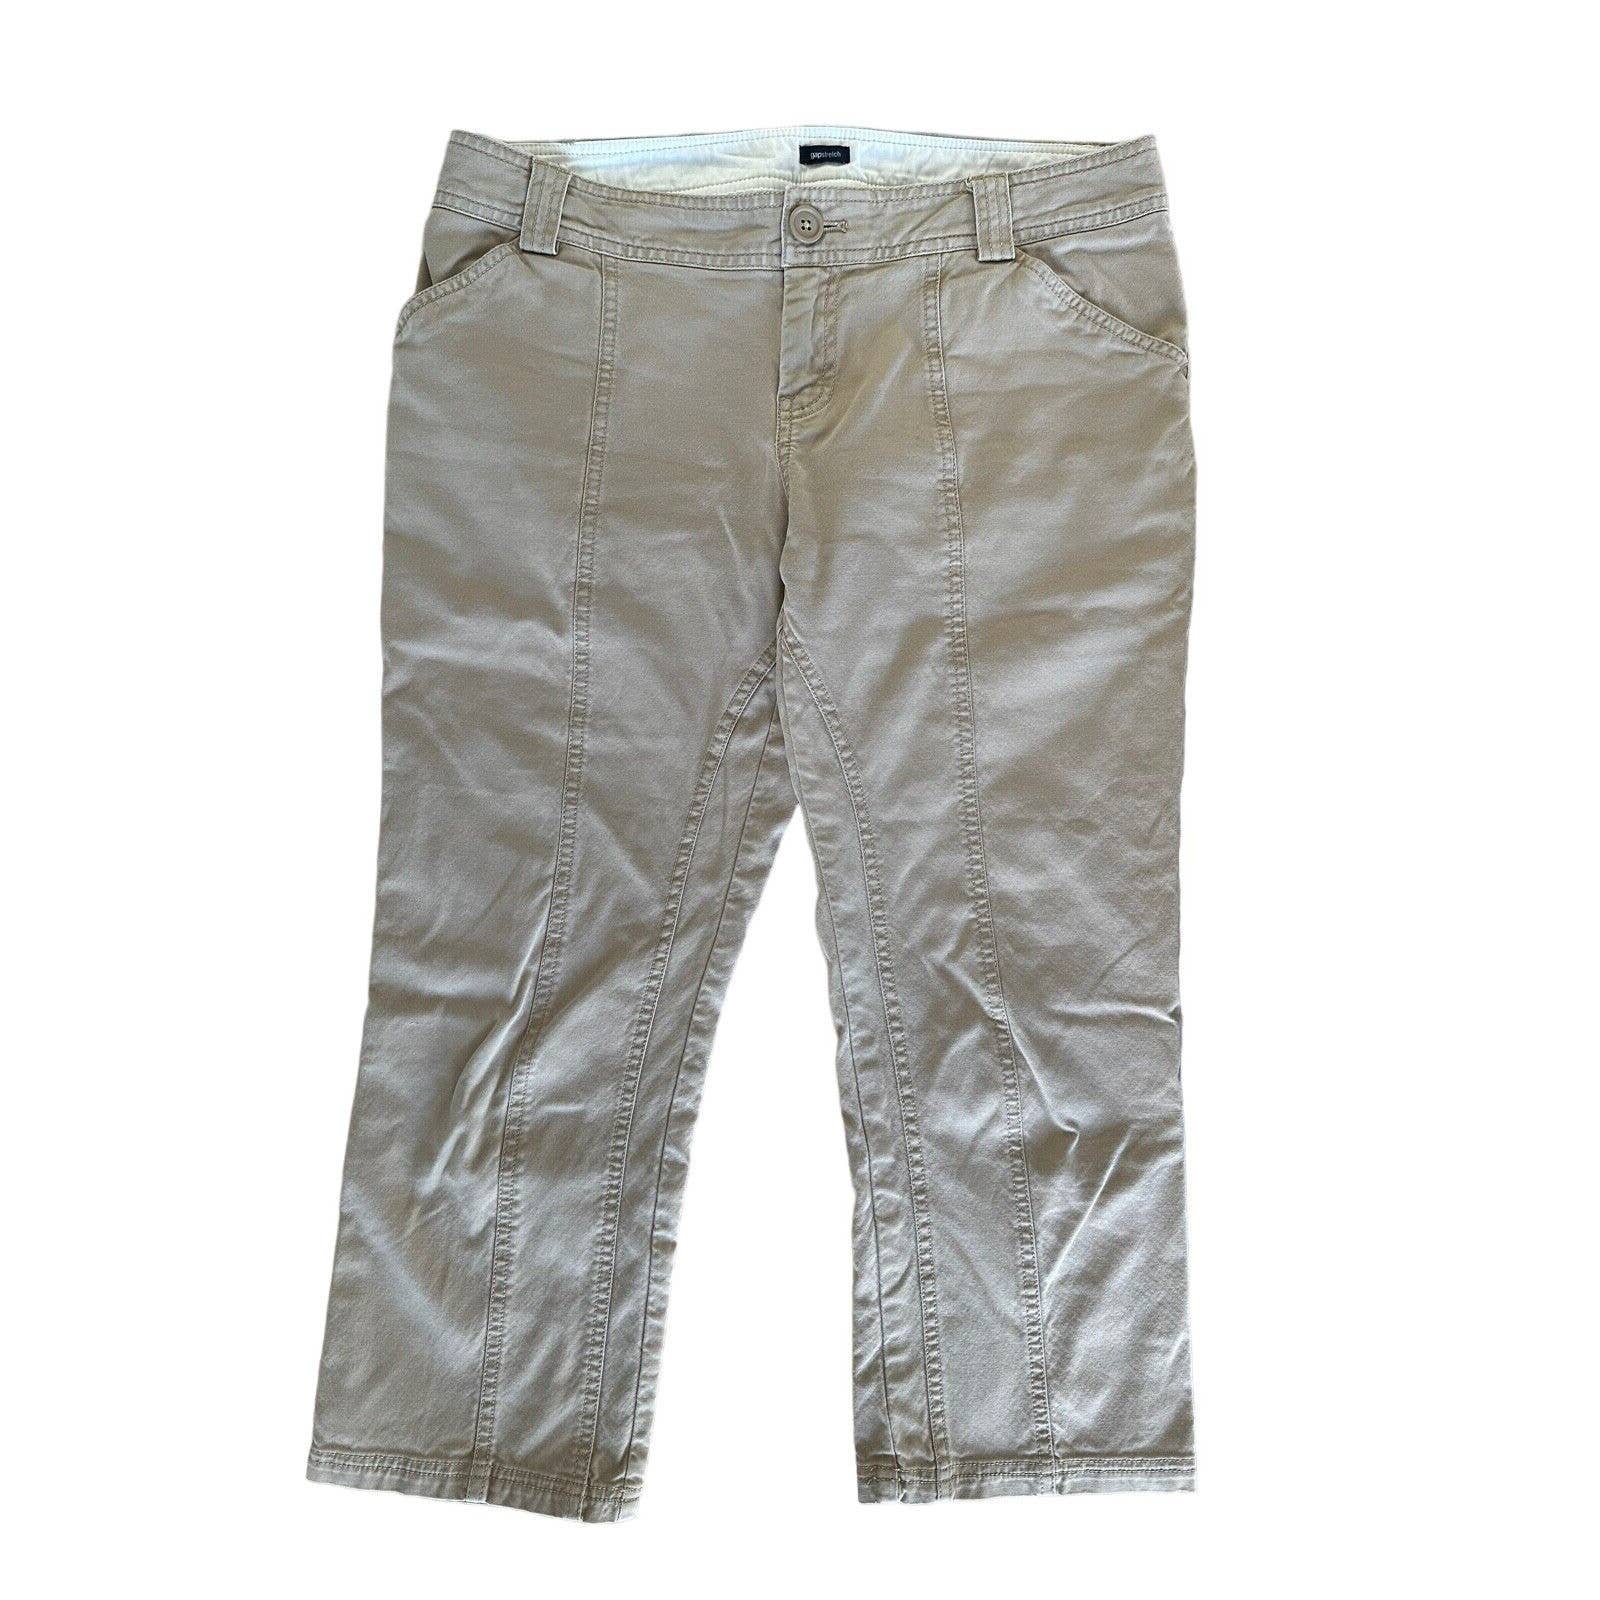 Stylish GAP Women´s Stretch Cargo Pants Cropped Cotton w/ Pockets Size 6 Khaki Beige MsQUgDf30 well sale